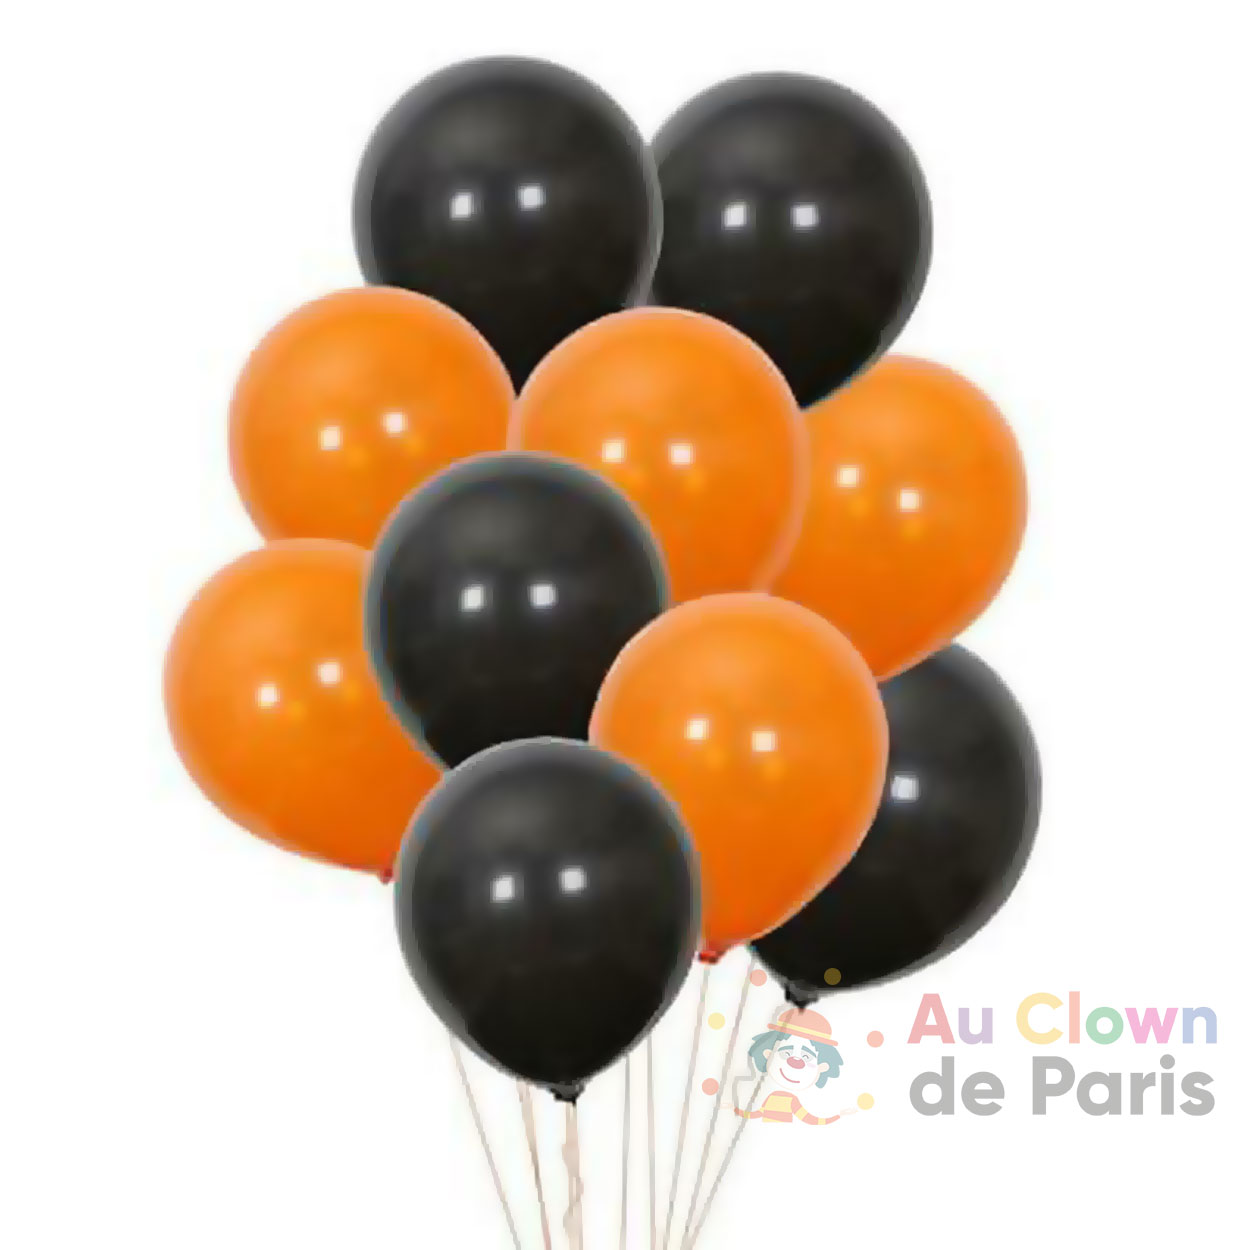 https://au-clown-de-paris.fr/wp-content/uploads/2021/10/helium-ballon-halloween.jpg